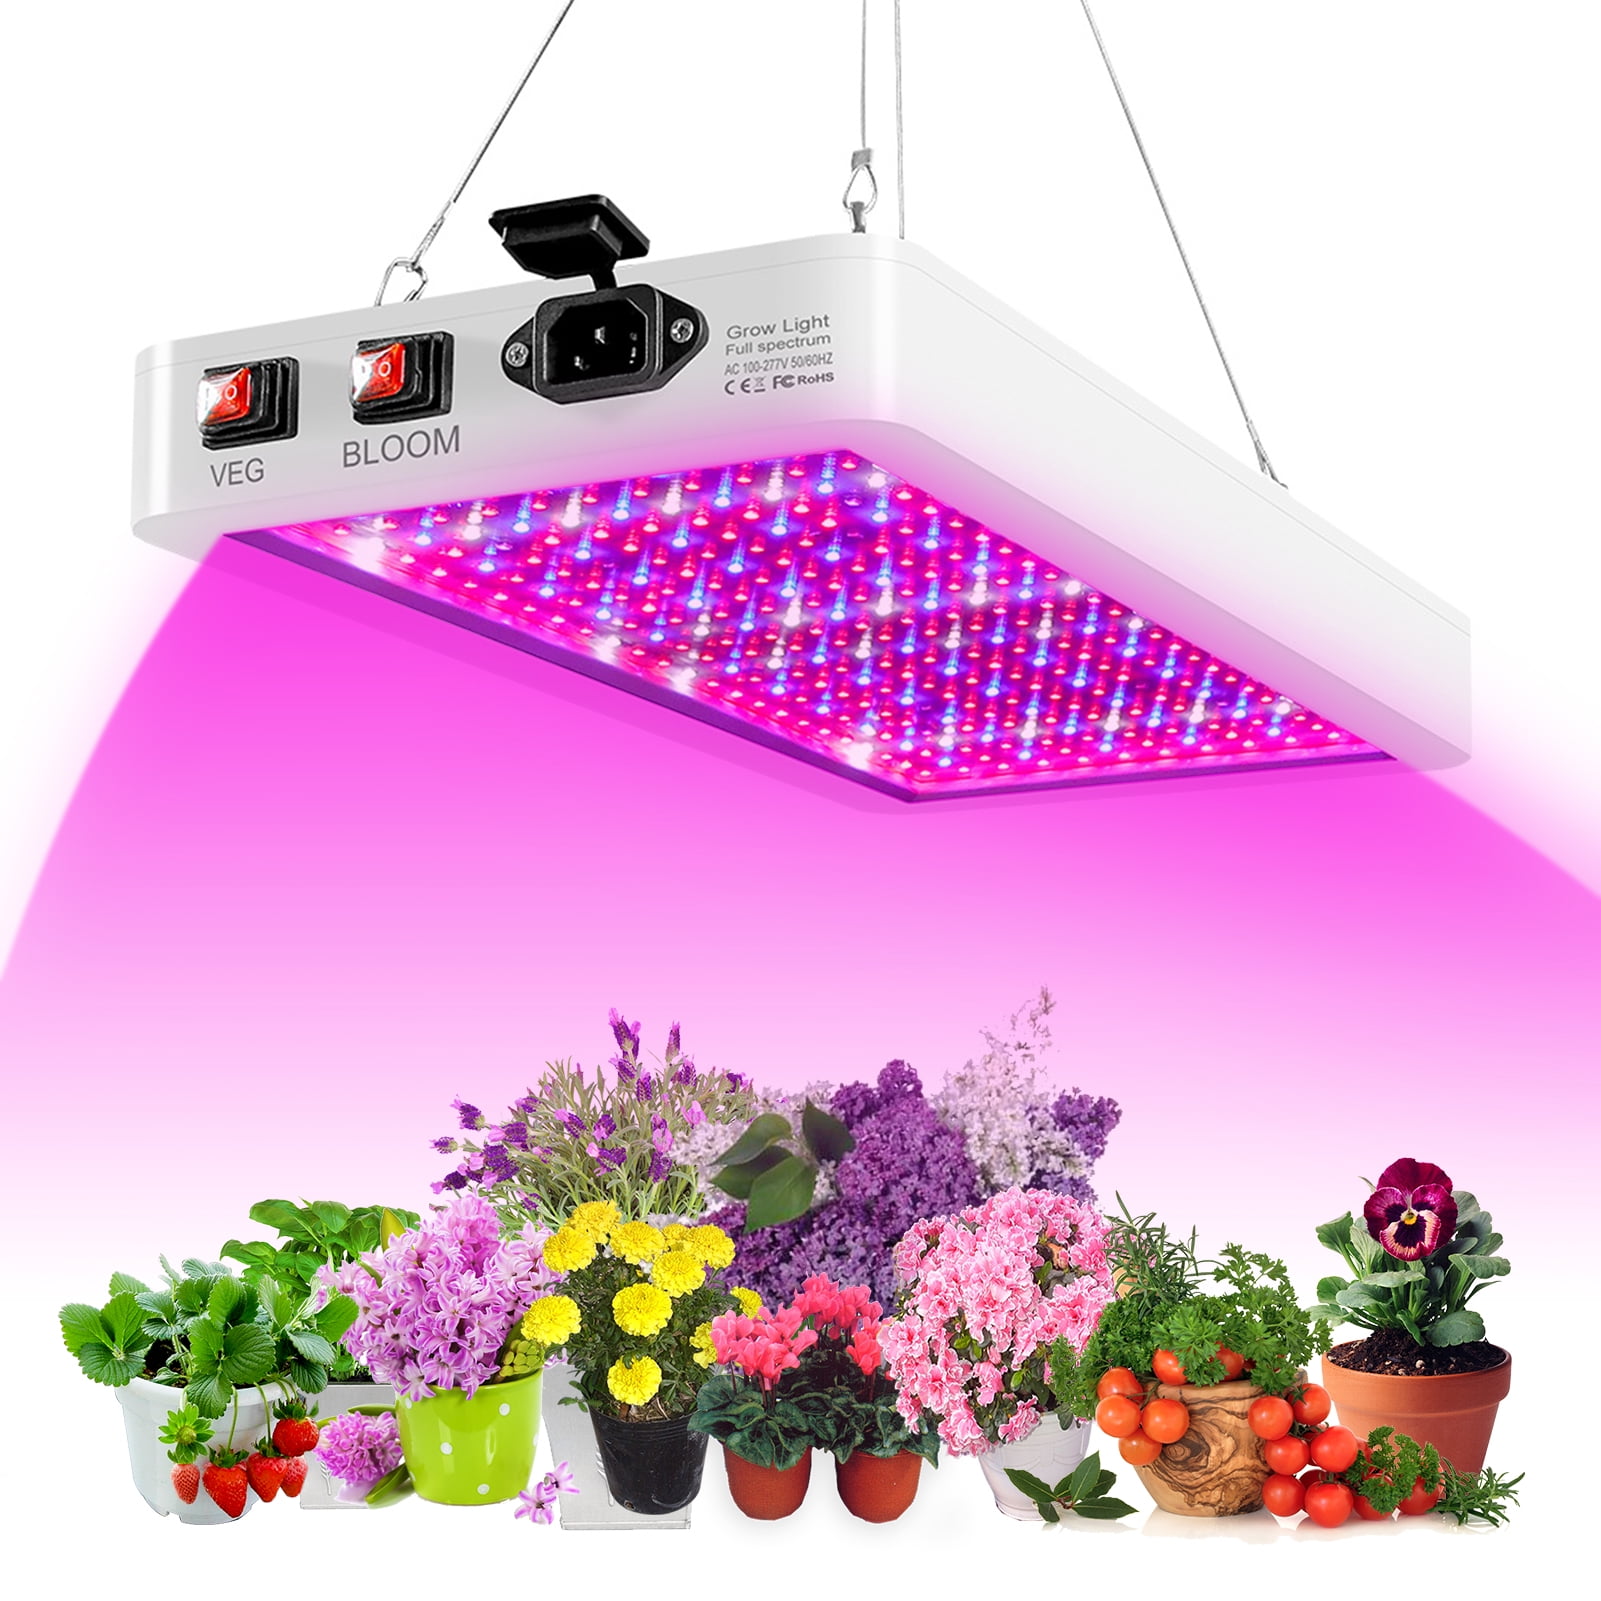 3000W 2000W COB LED PLANT GROW LIGHT LAMP FULL SPECTRUM FLOWER VEG HYDROPONICS 